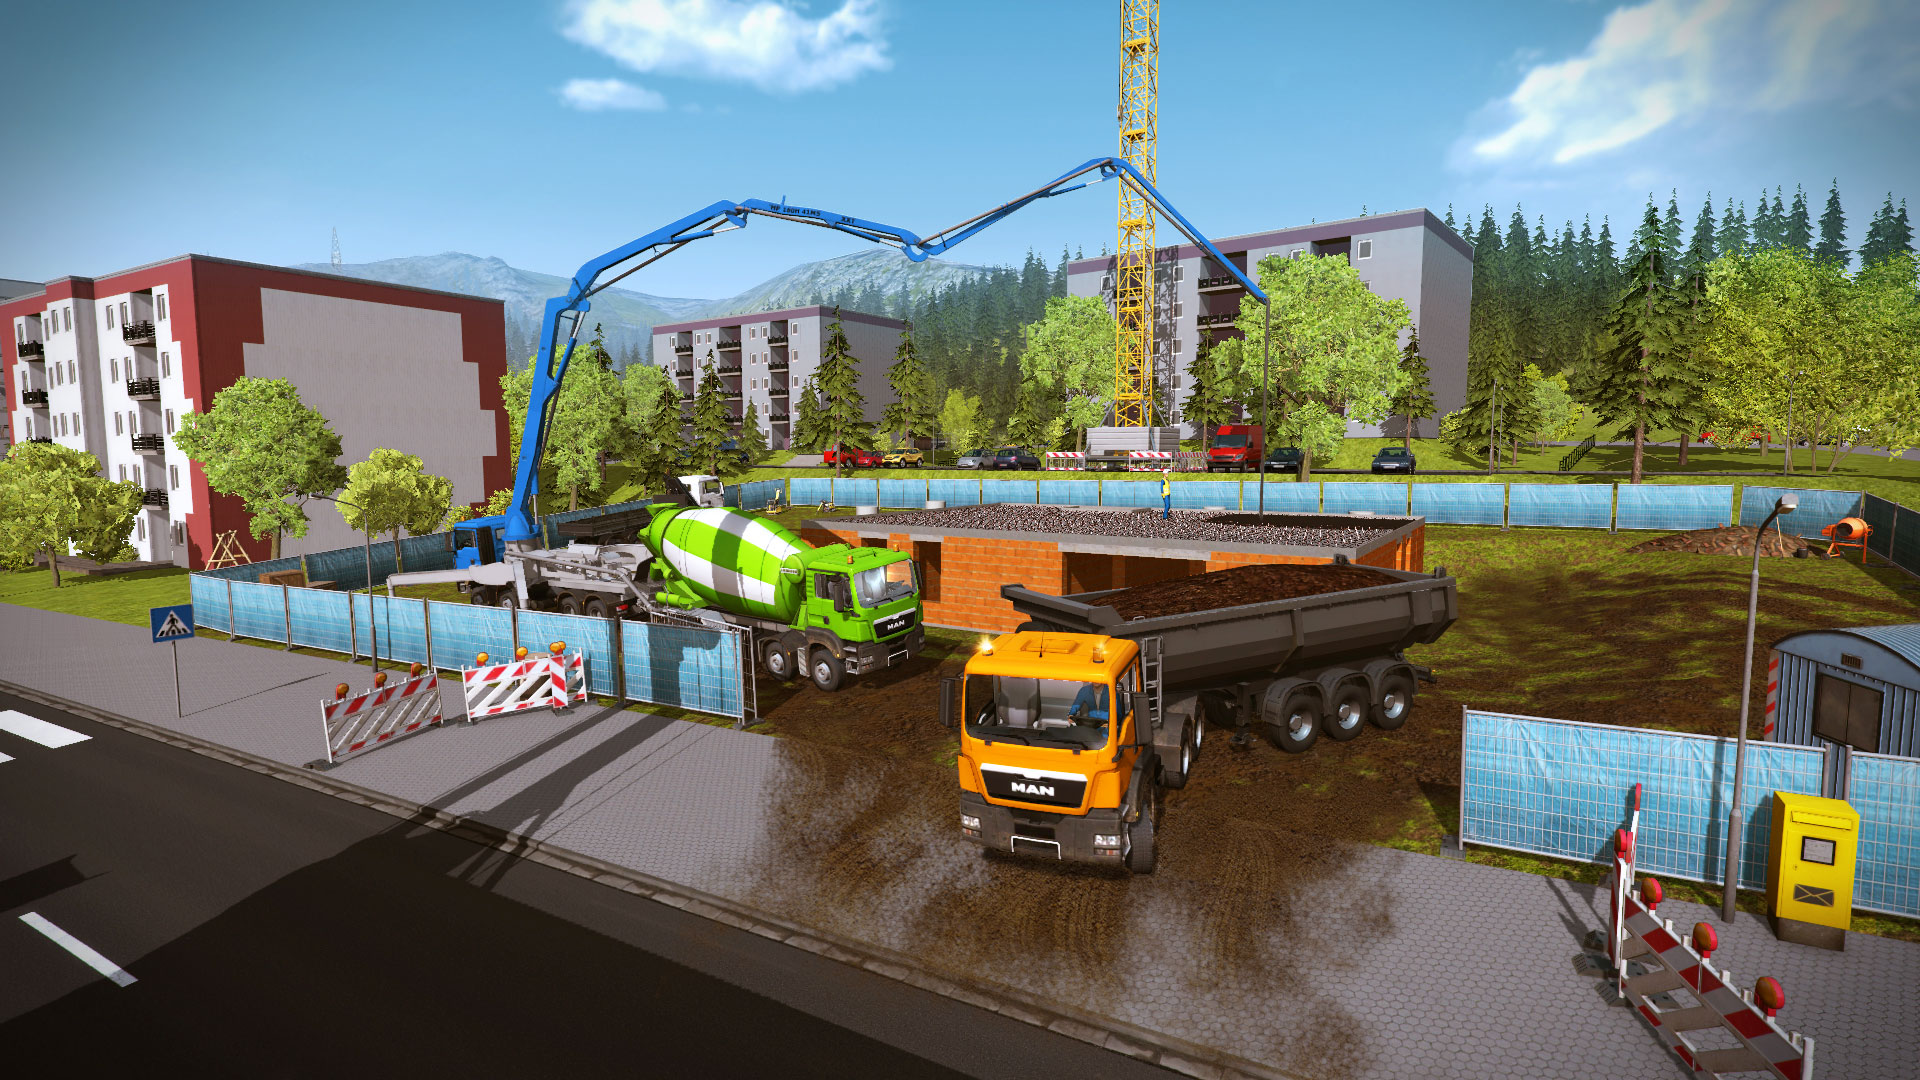 construction simulator 2015 ios